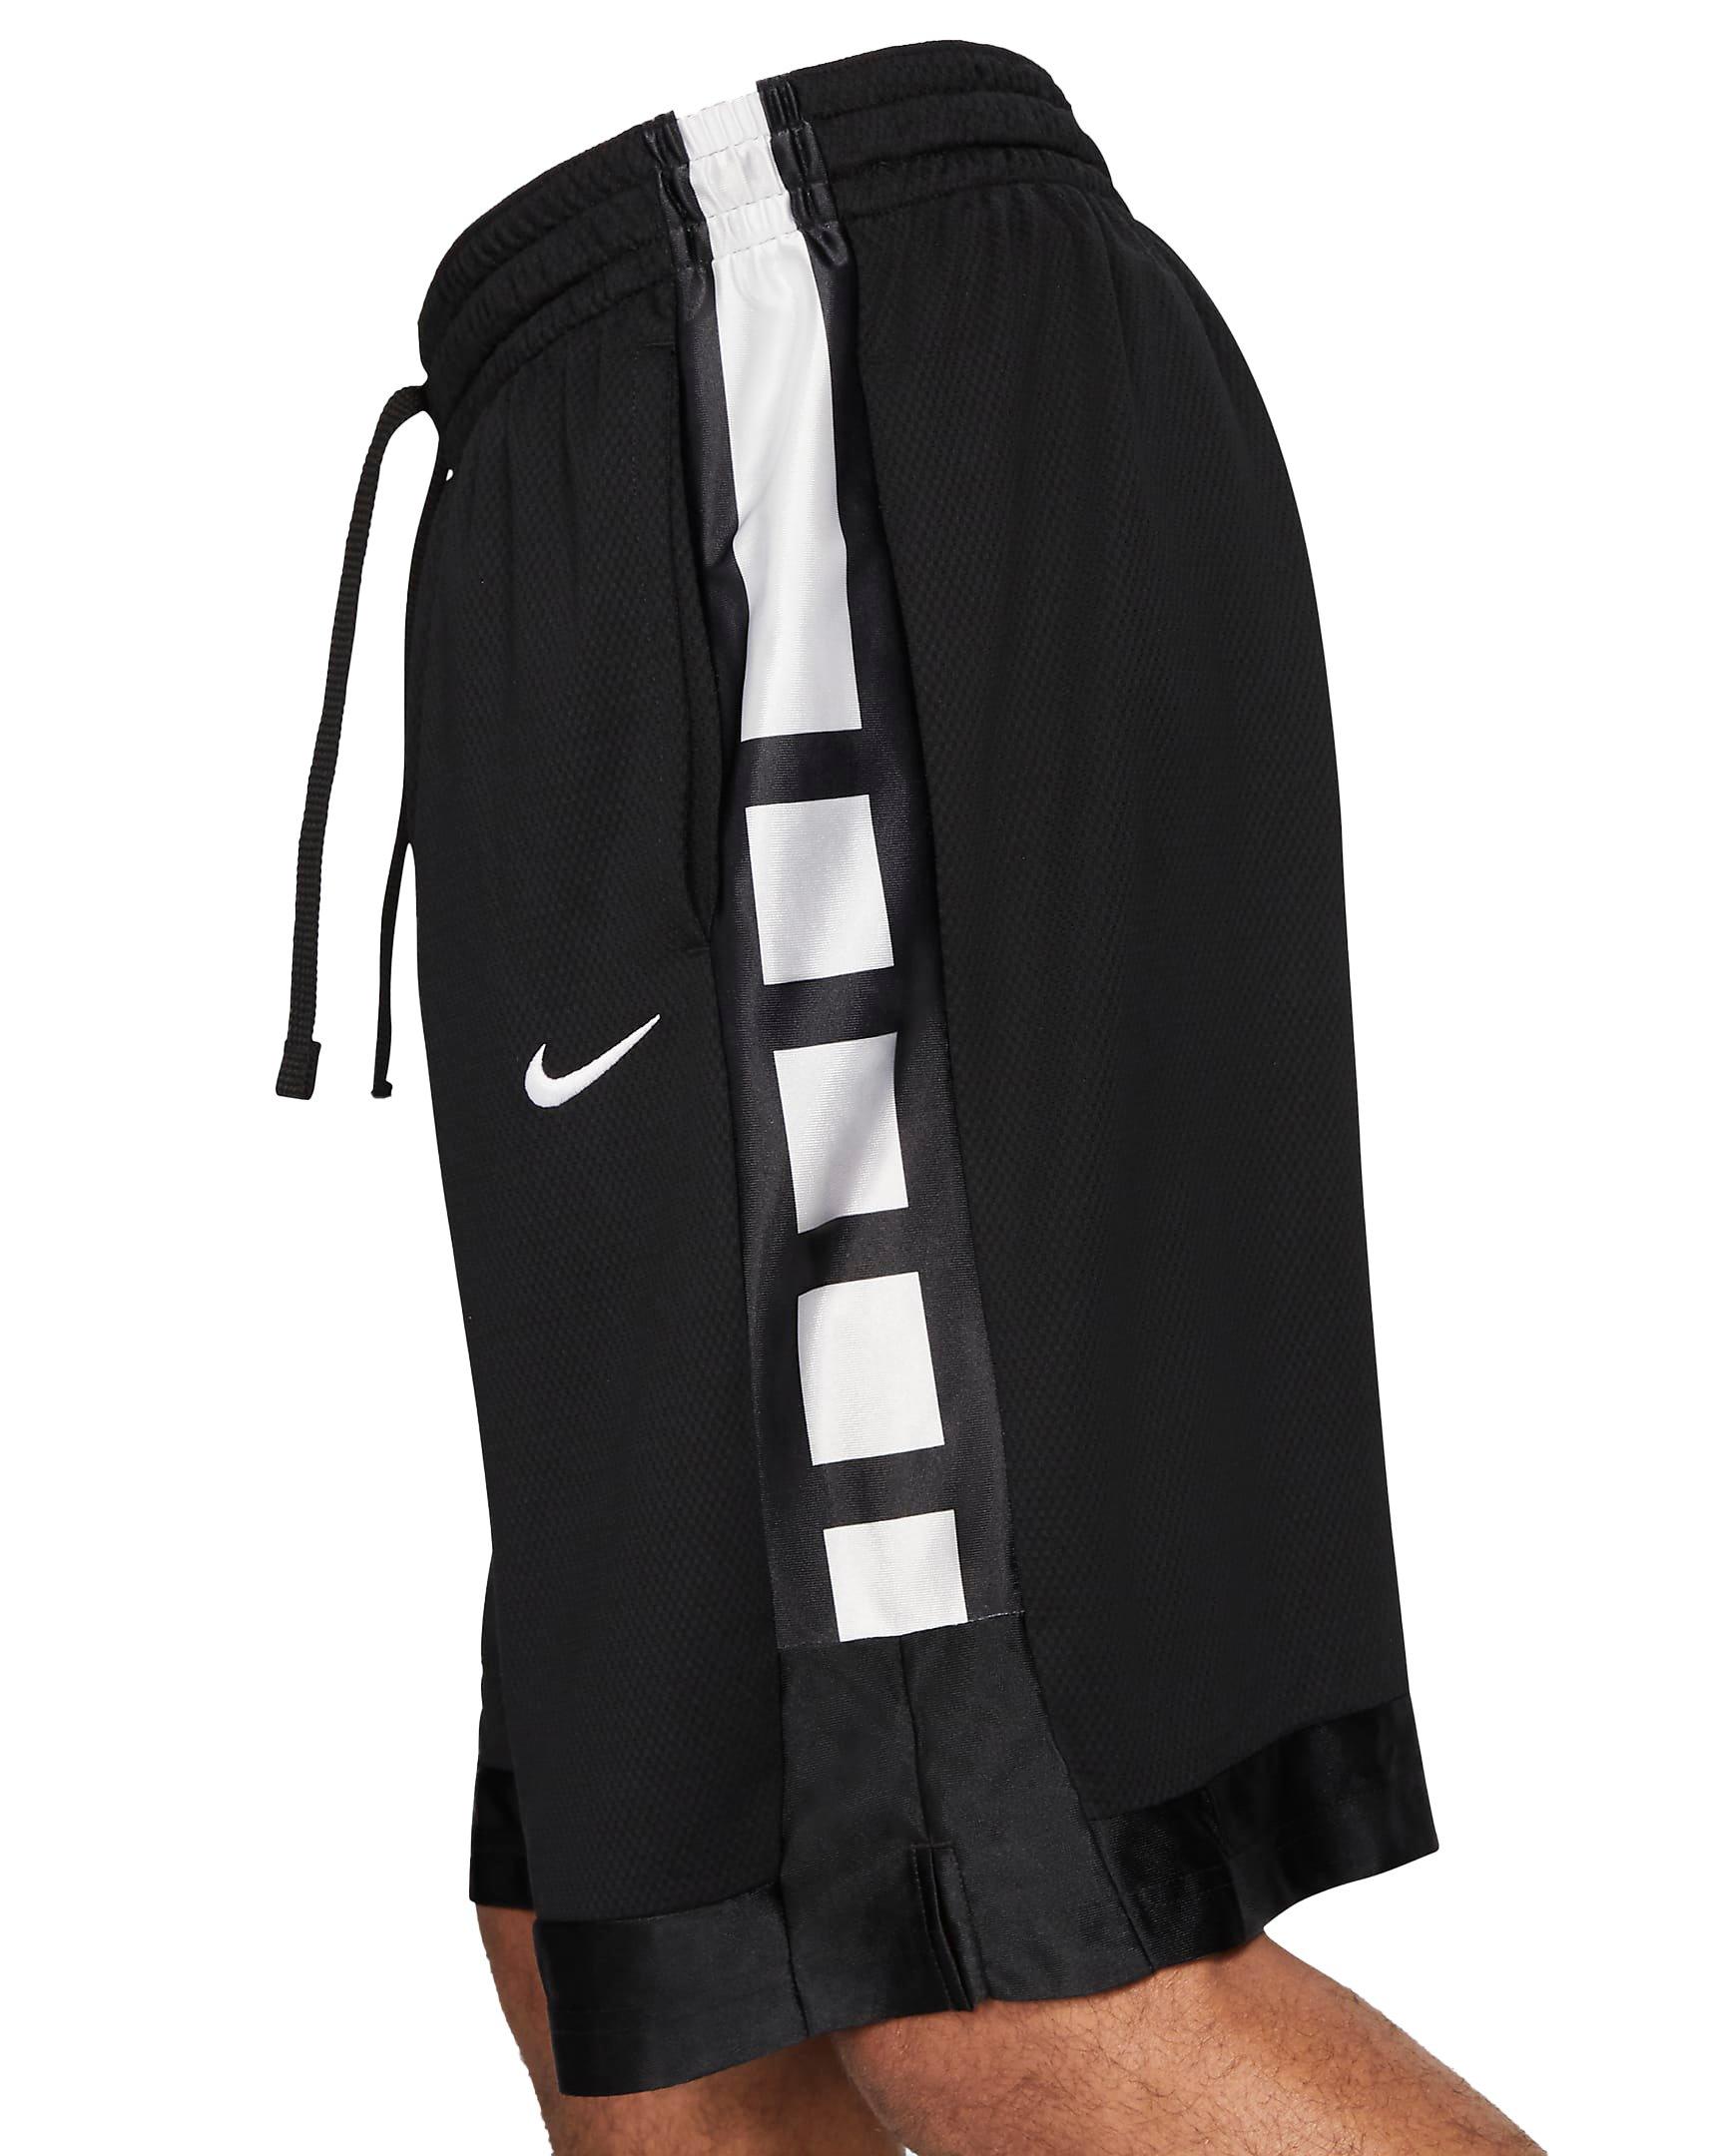 Nike Boys Dri-Fit Elite Stripe Basketball Shorts White/Black AT3072 New ...